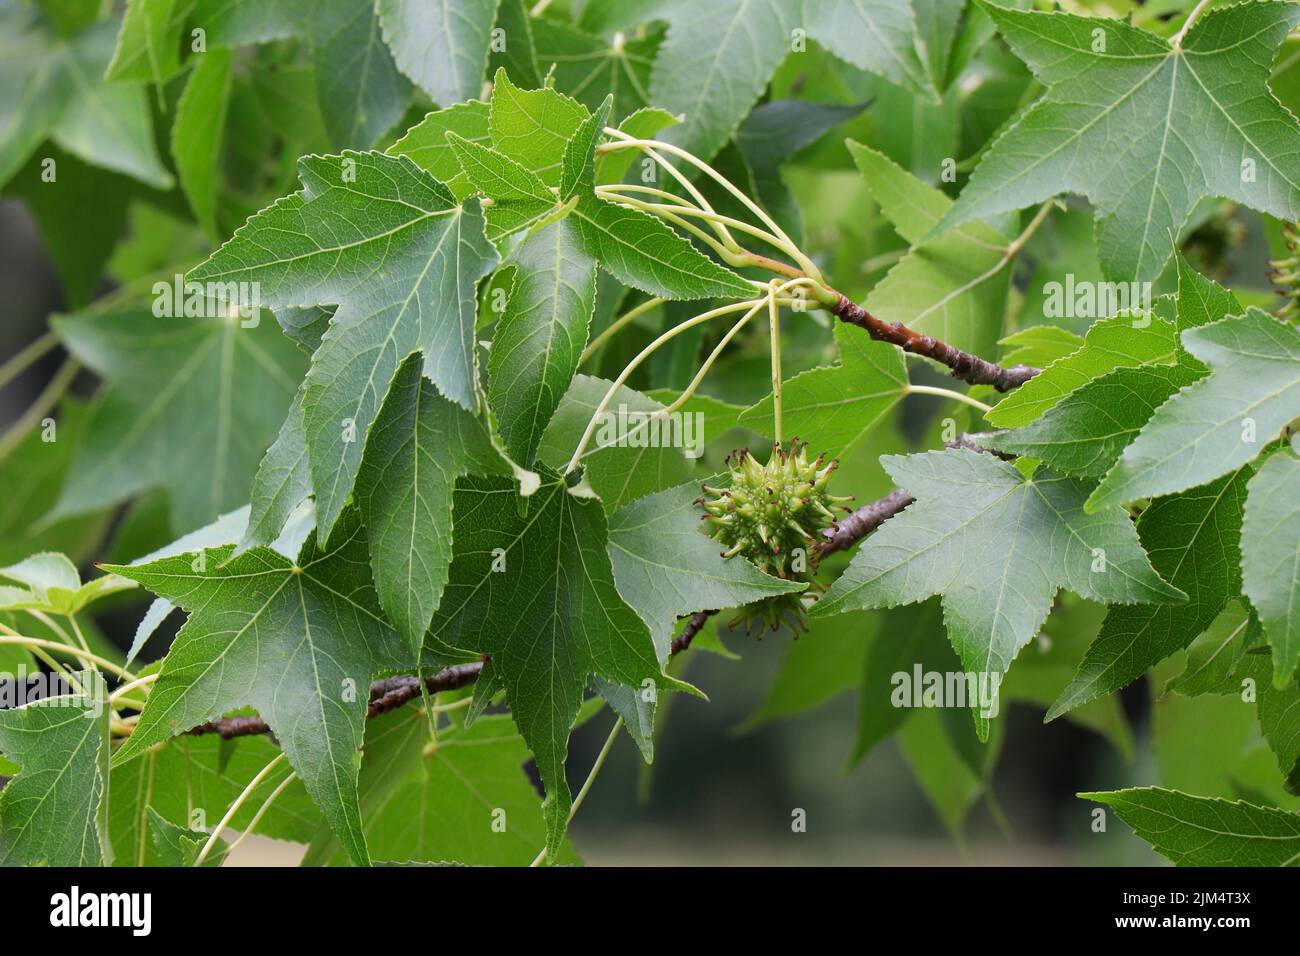 Branches of American sweetgum or Liquidambar styraciflua tree Stock Photo